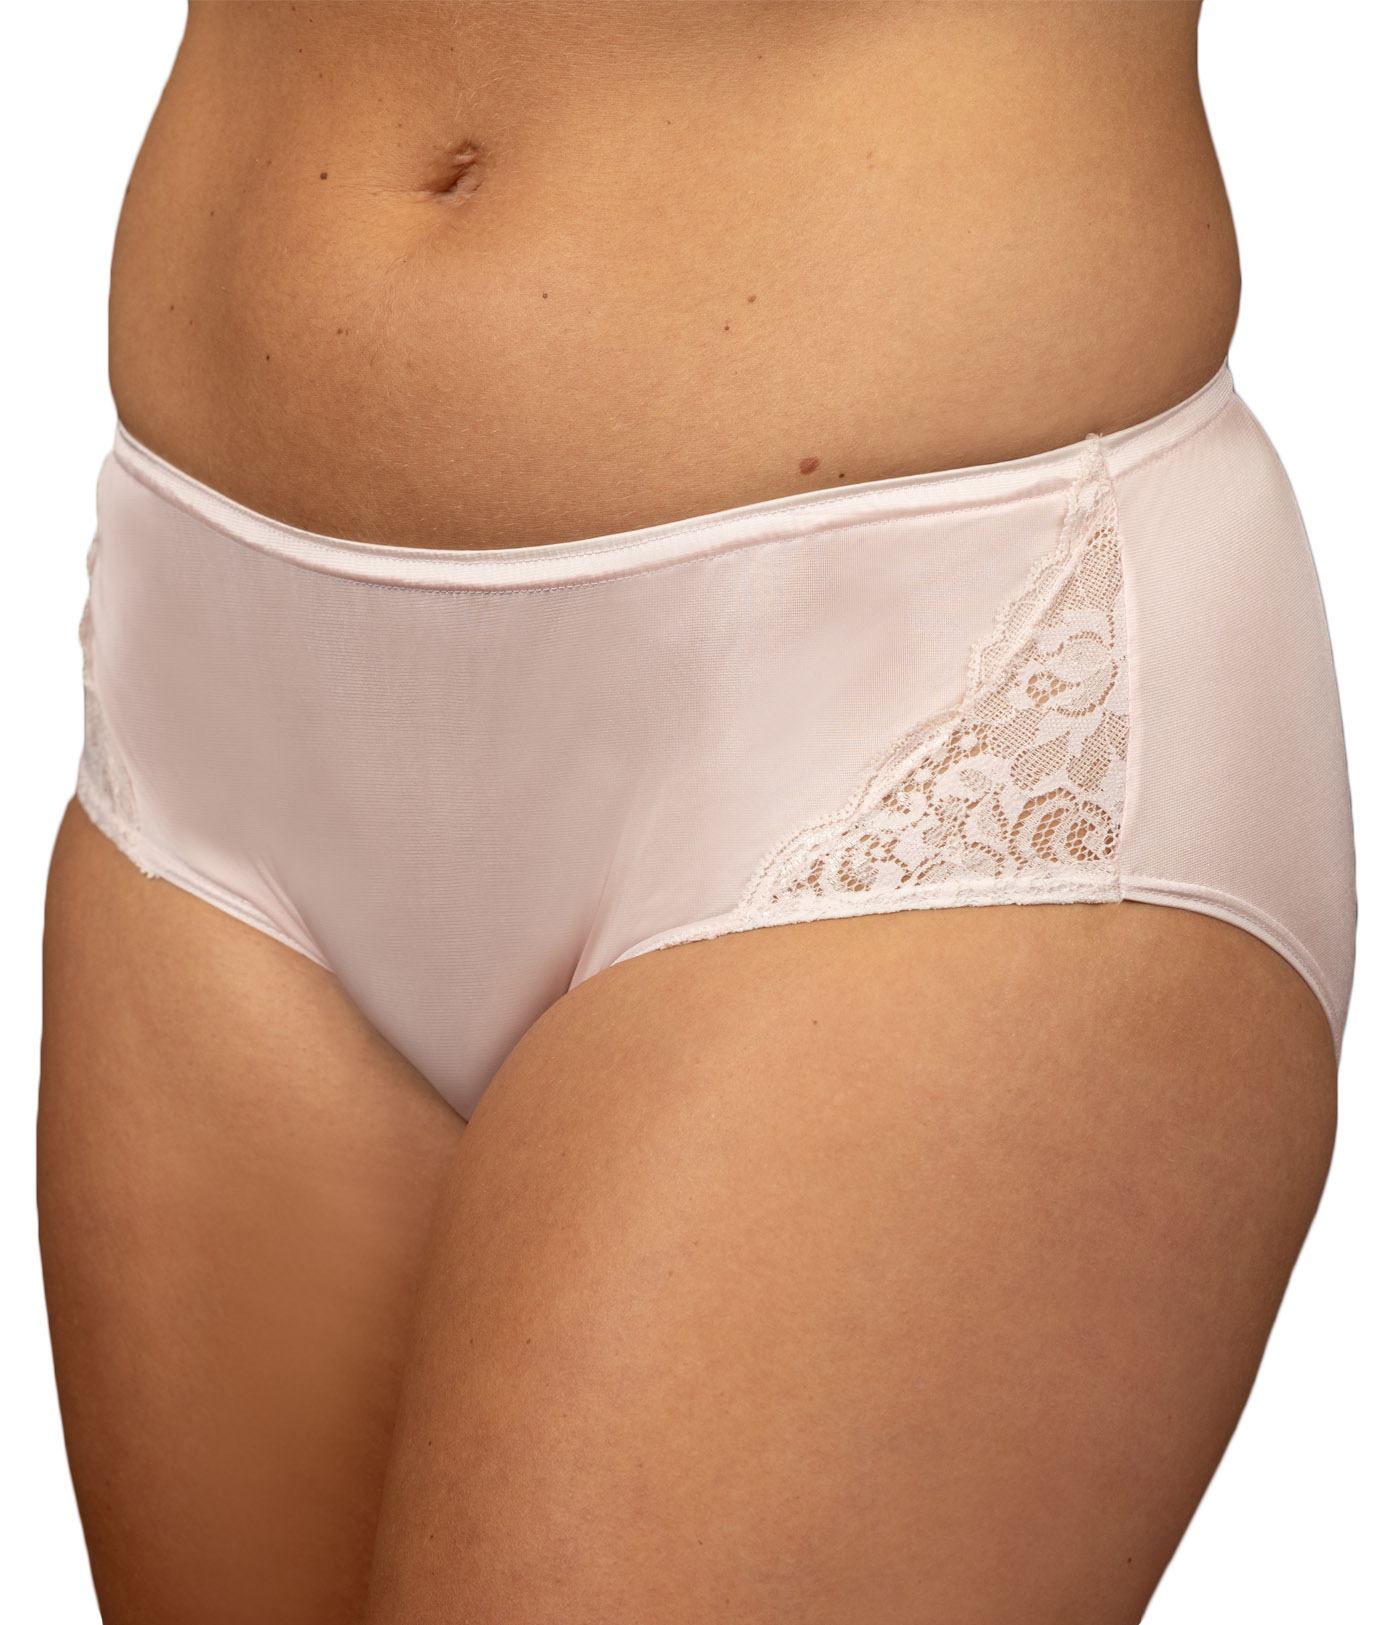 Granny Panties XXL Comfort Choice Plus Size 11 White Satiny Smooth